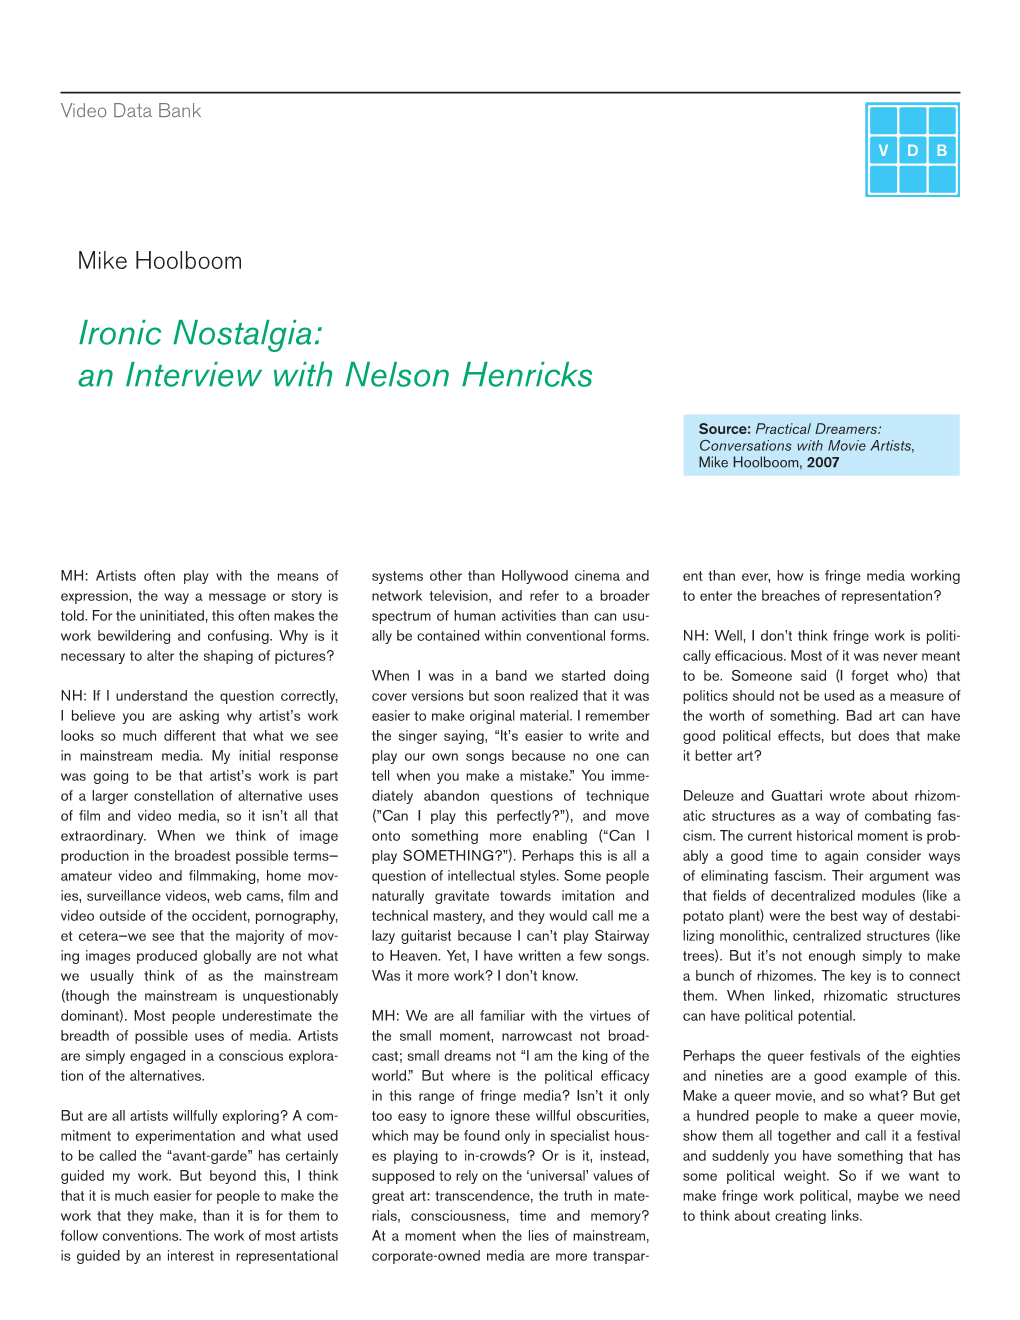 An Interview with Nelson Henricks